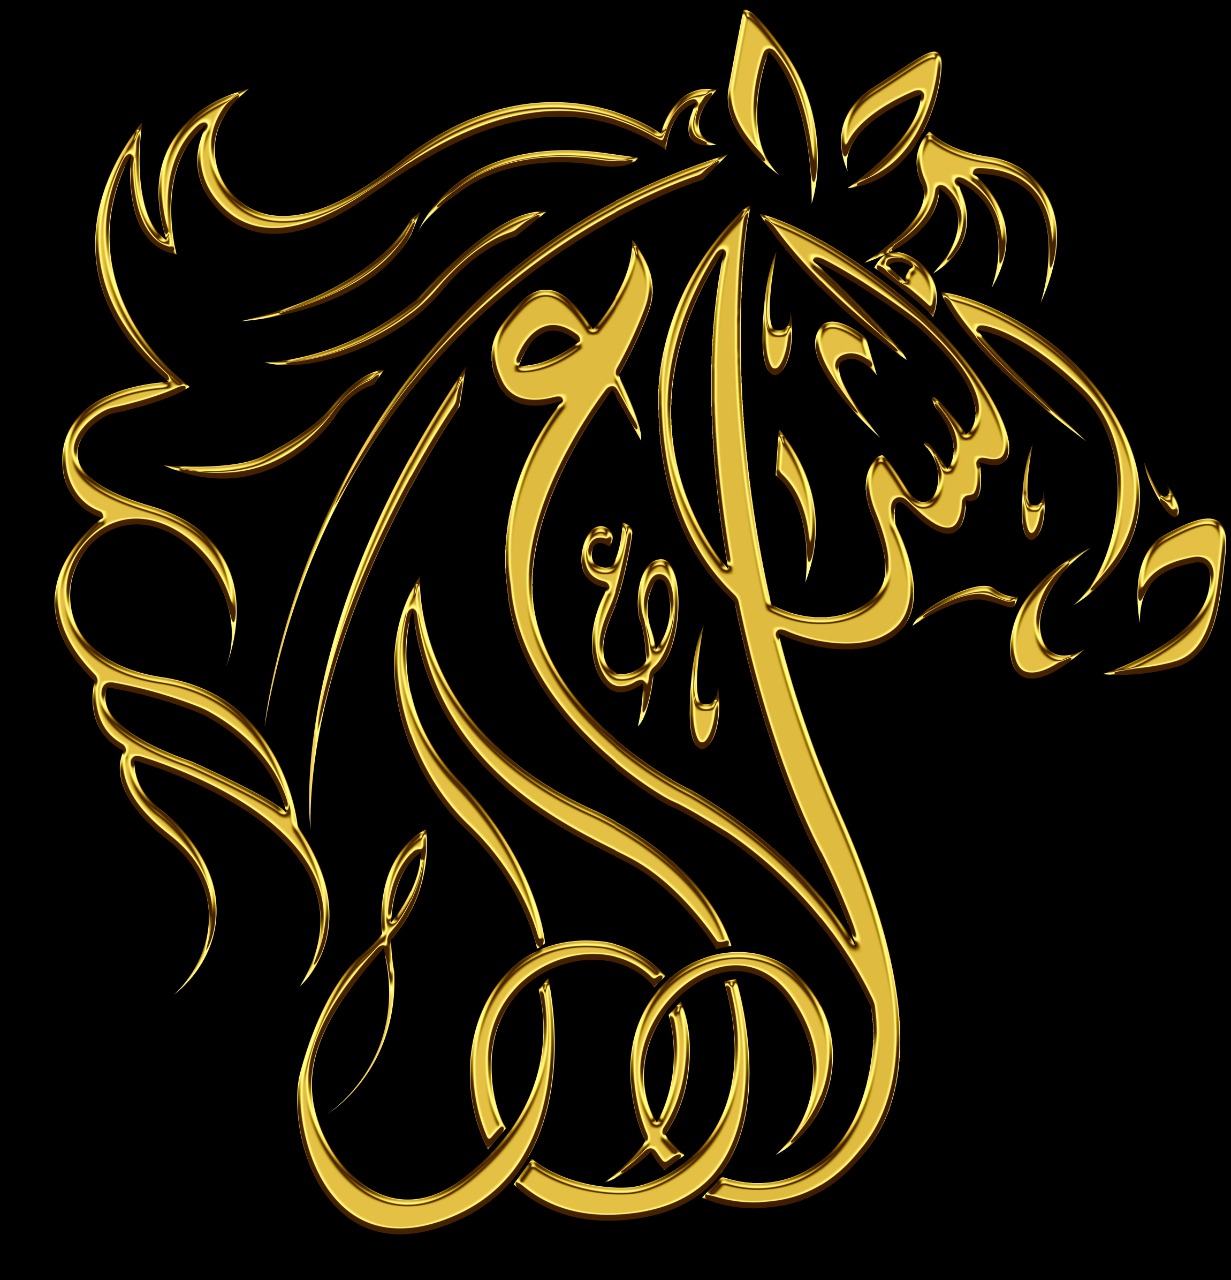 uk logo